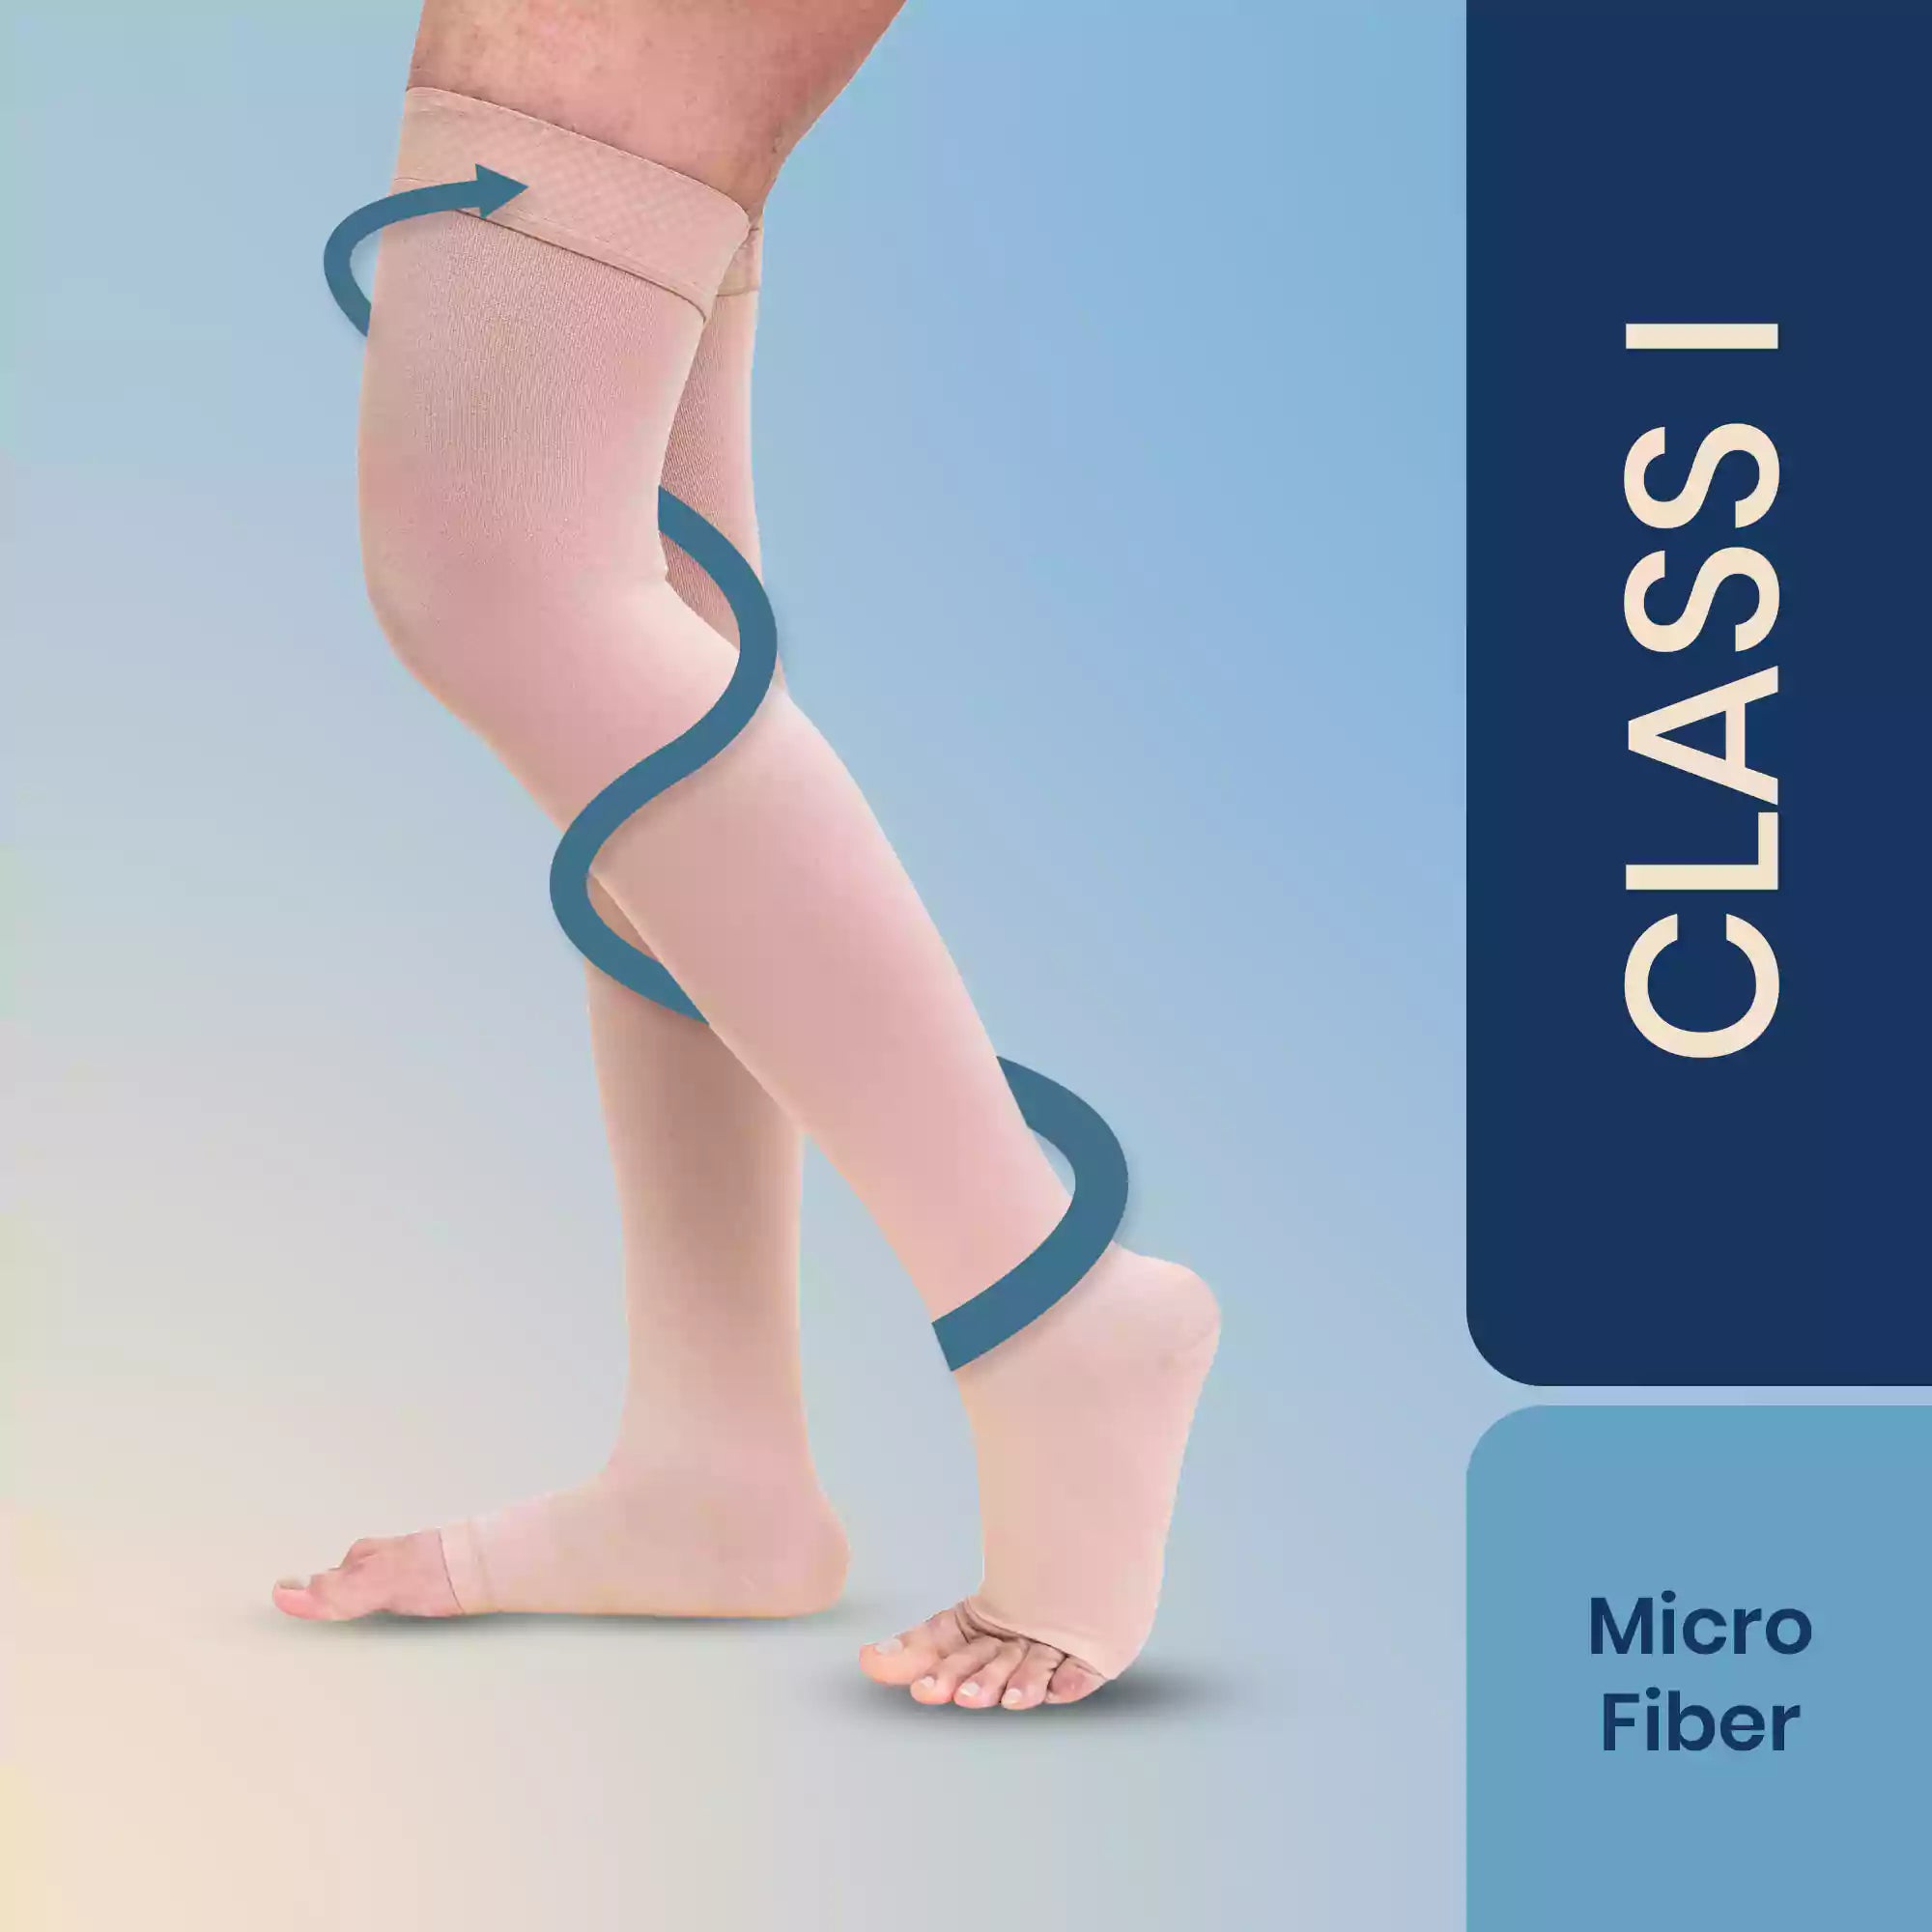 Sorgen Classique (Lycra) Medical Compression Stockings For Varicose Veins  Class 1 Knee Length (Medium)